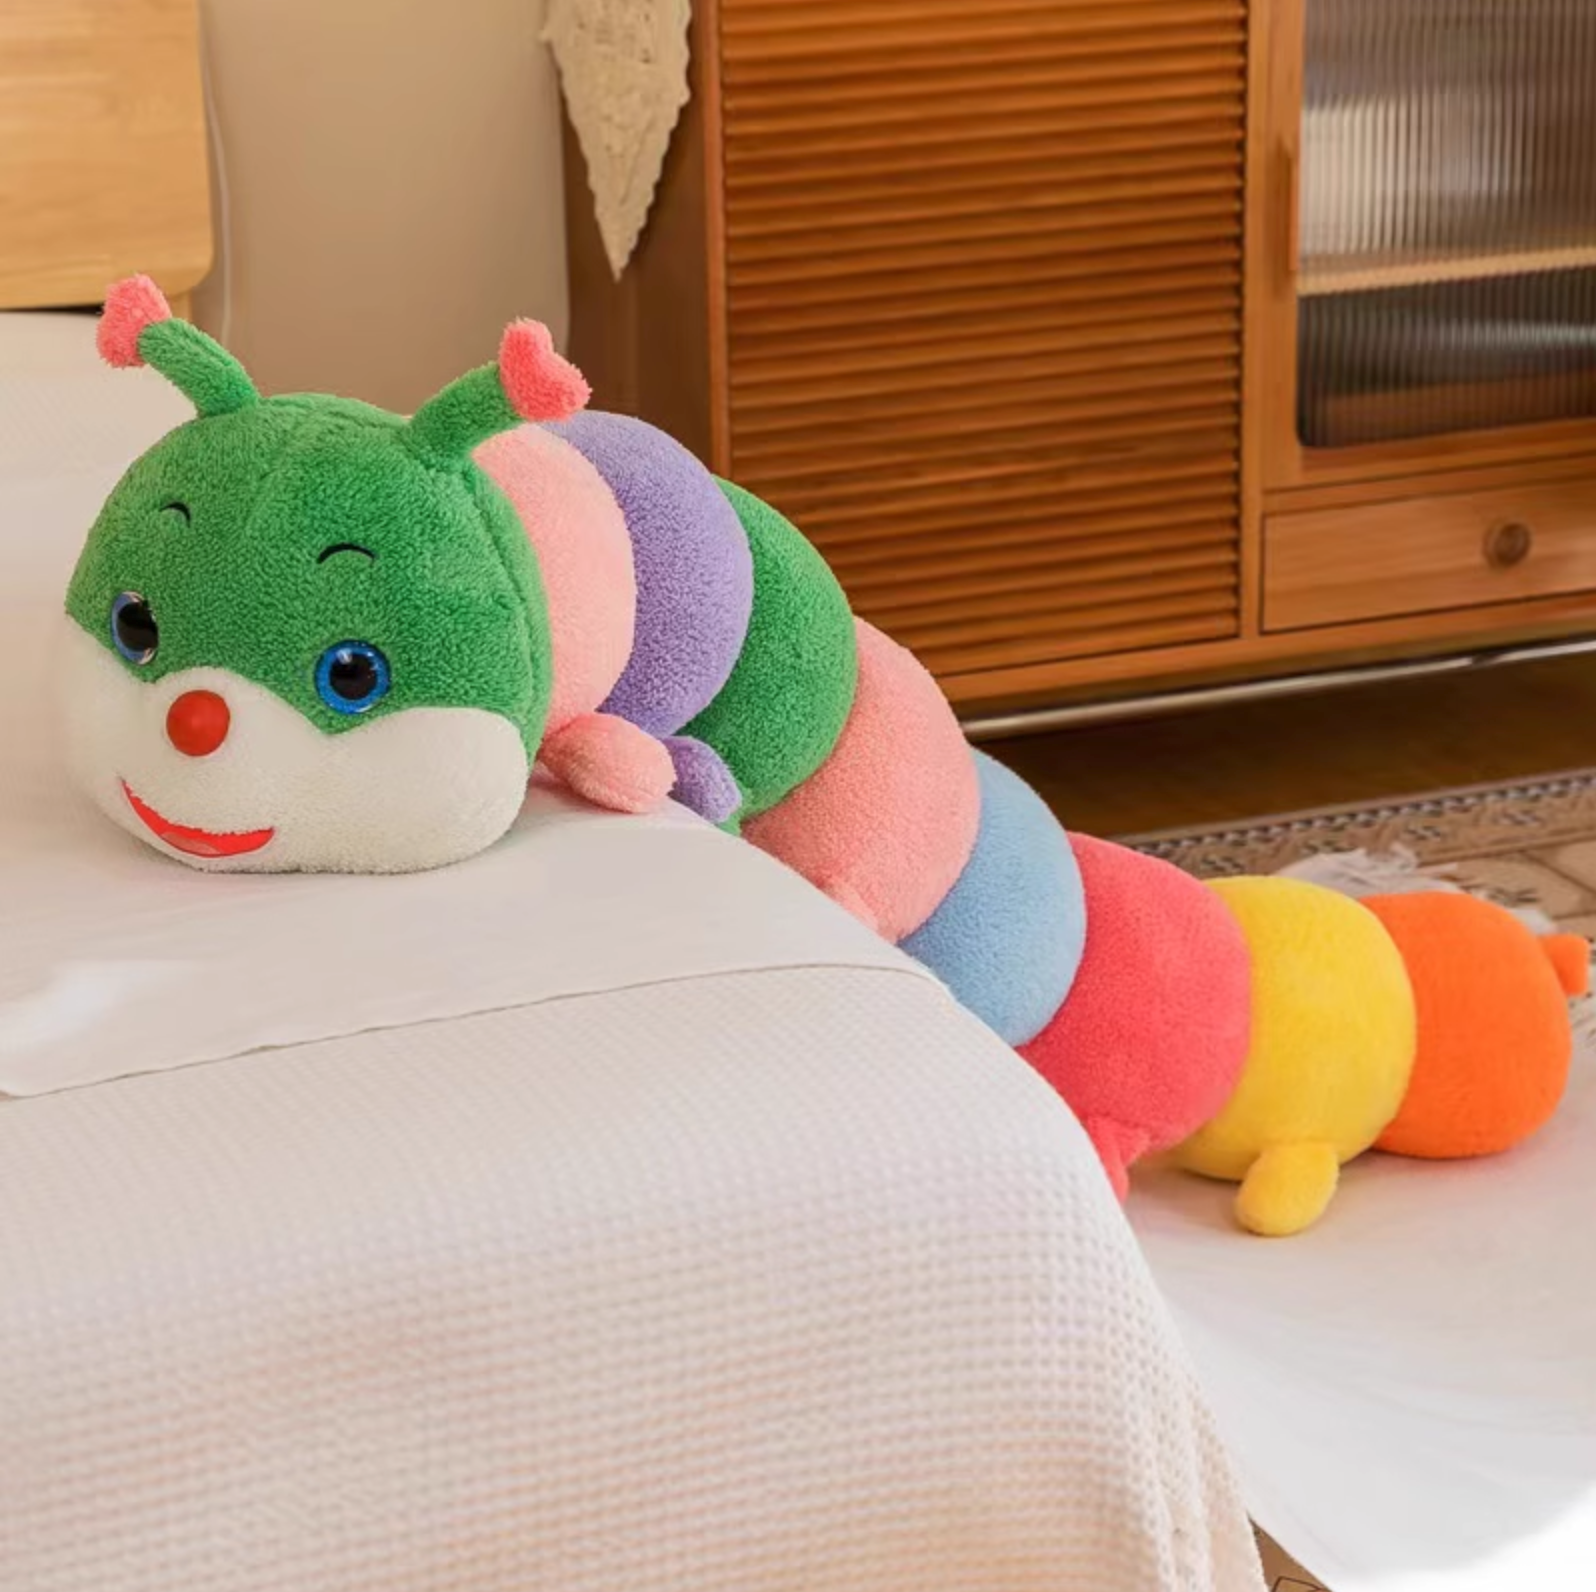 omgkawaii Cuddly Critter: The Charming Caterpillar Plush Toy